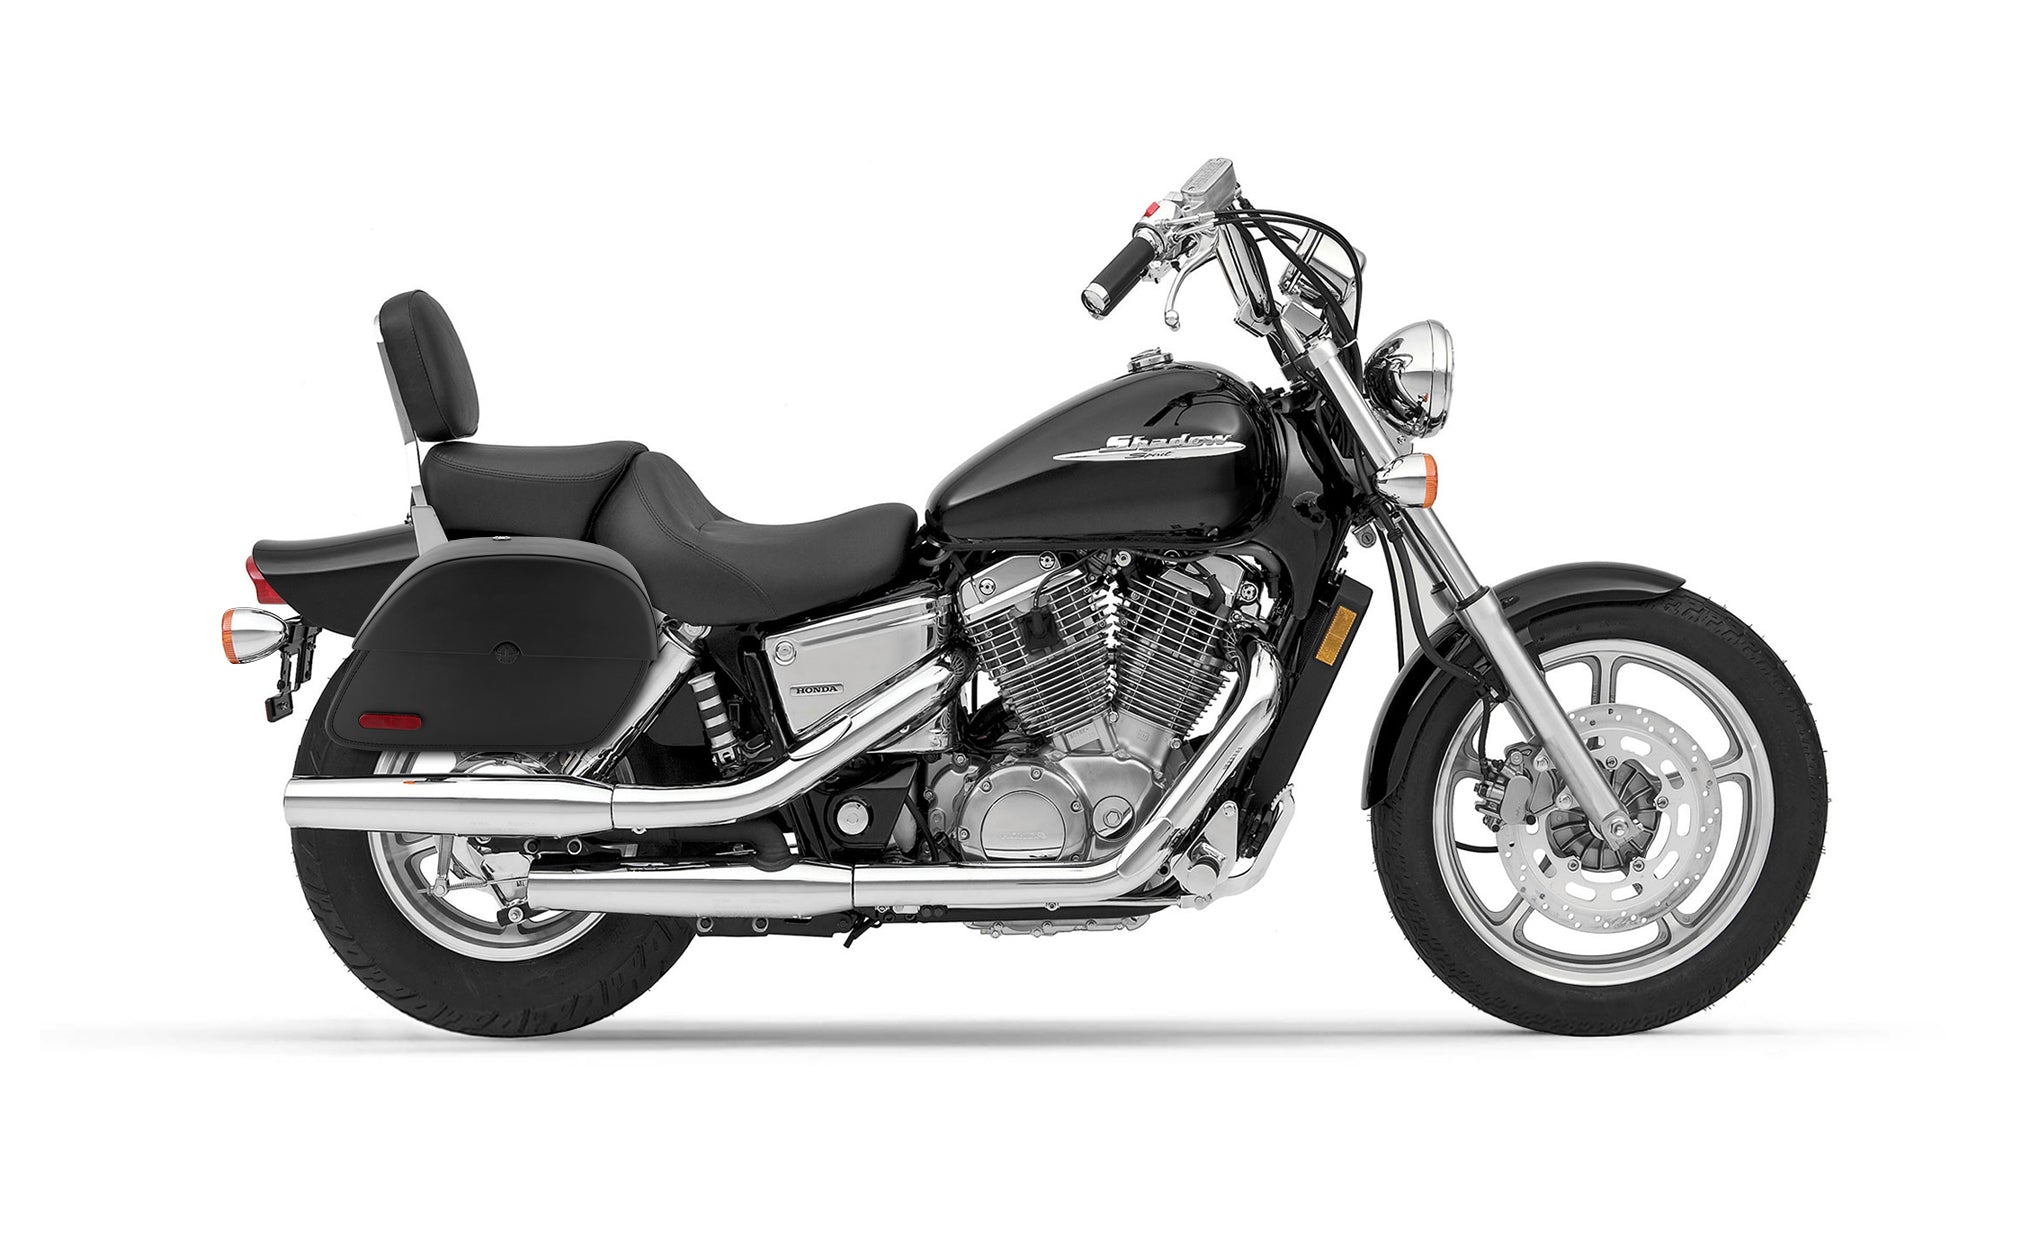 Viking Panzer Medium Honda Shadow 1100 Spirit Leather Motorcycle Saddlebags Engineering Excellence with Bag on Bike @expand